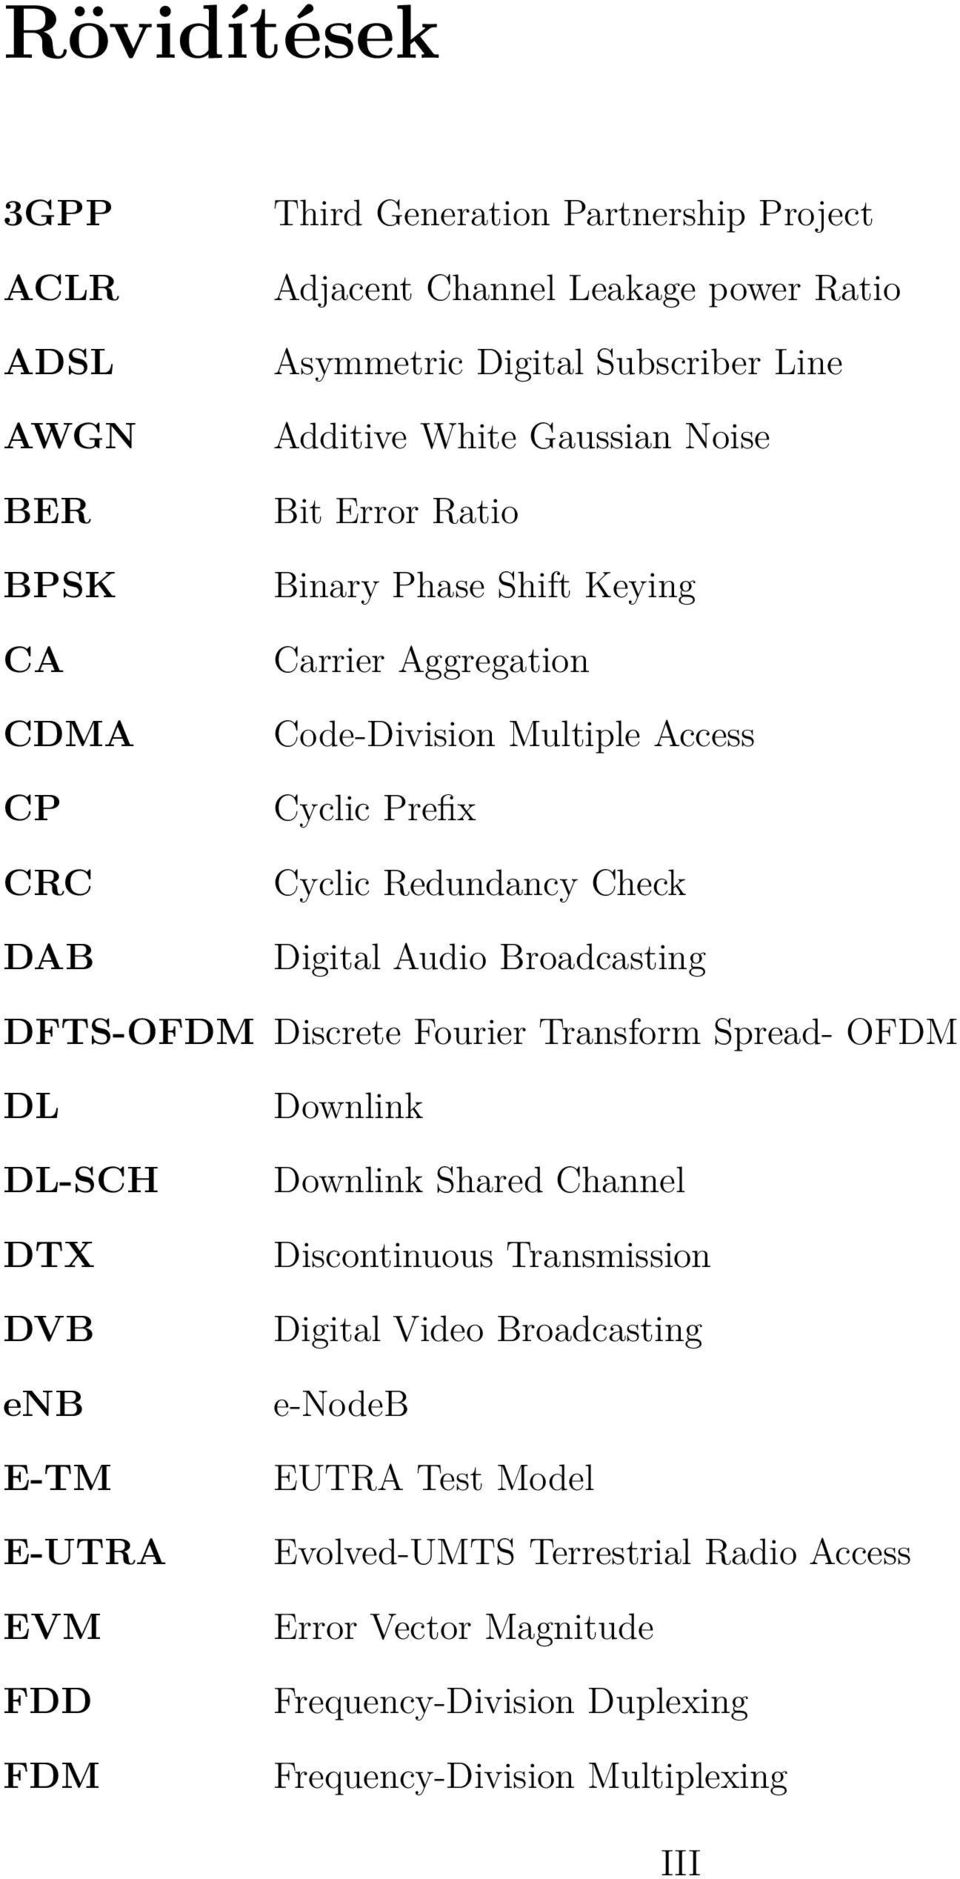 Audio Broadcasting DFTS-OFDM Discrete Fourier Transform Spread- OFDM DL DL-SCH DTX DVB enb E-TM E-UTRA EVM FDD FDM Downlink Downlink Shared Channel Discontinuous